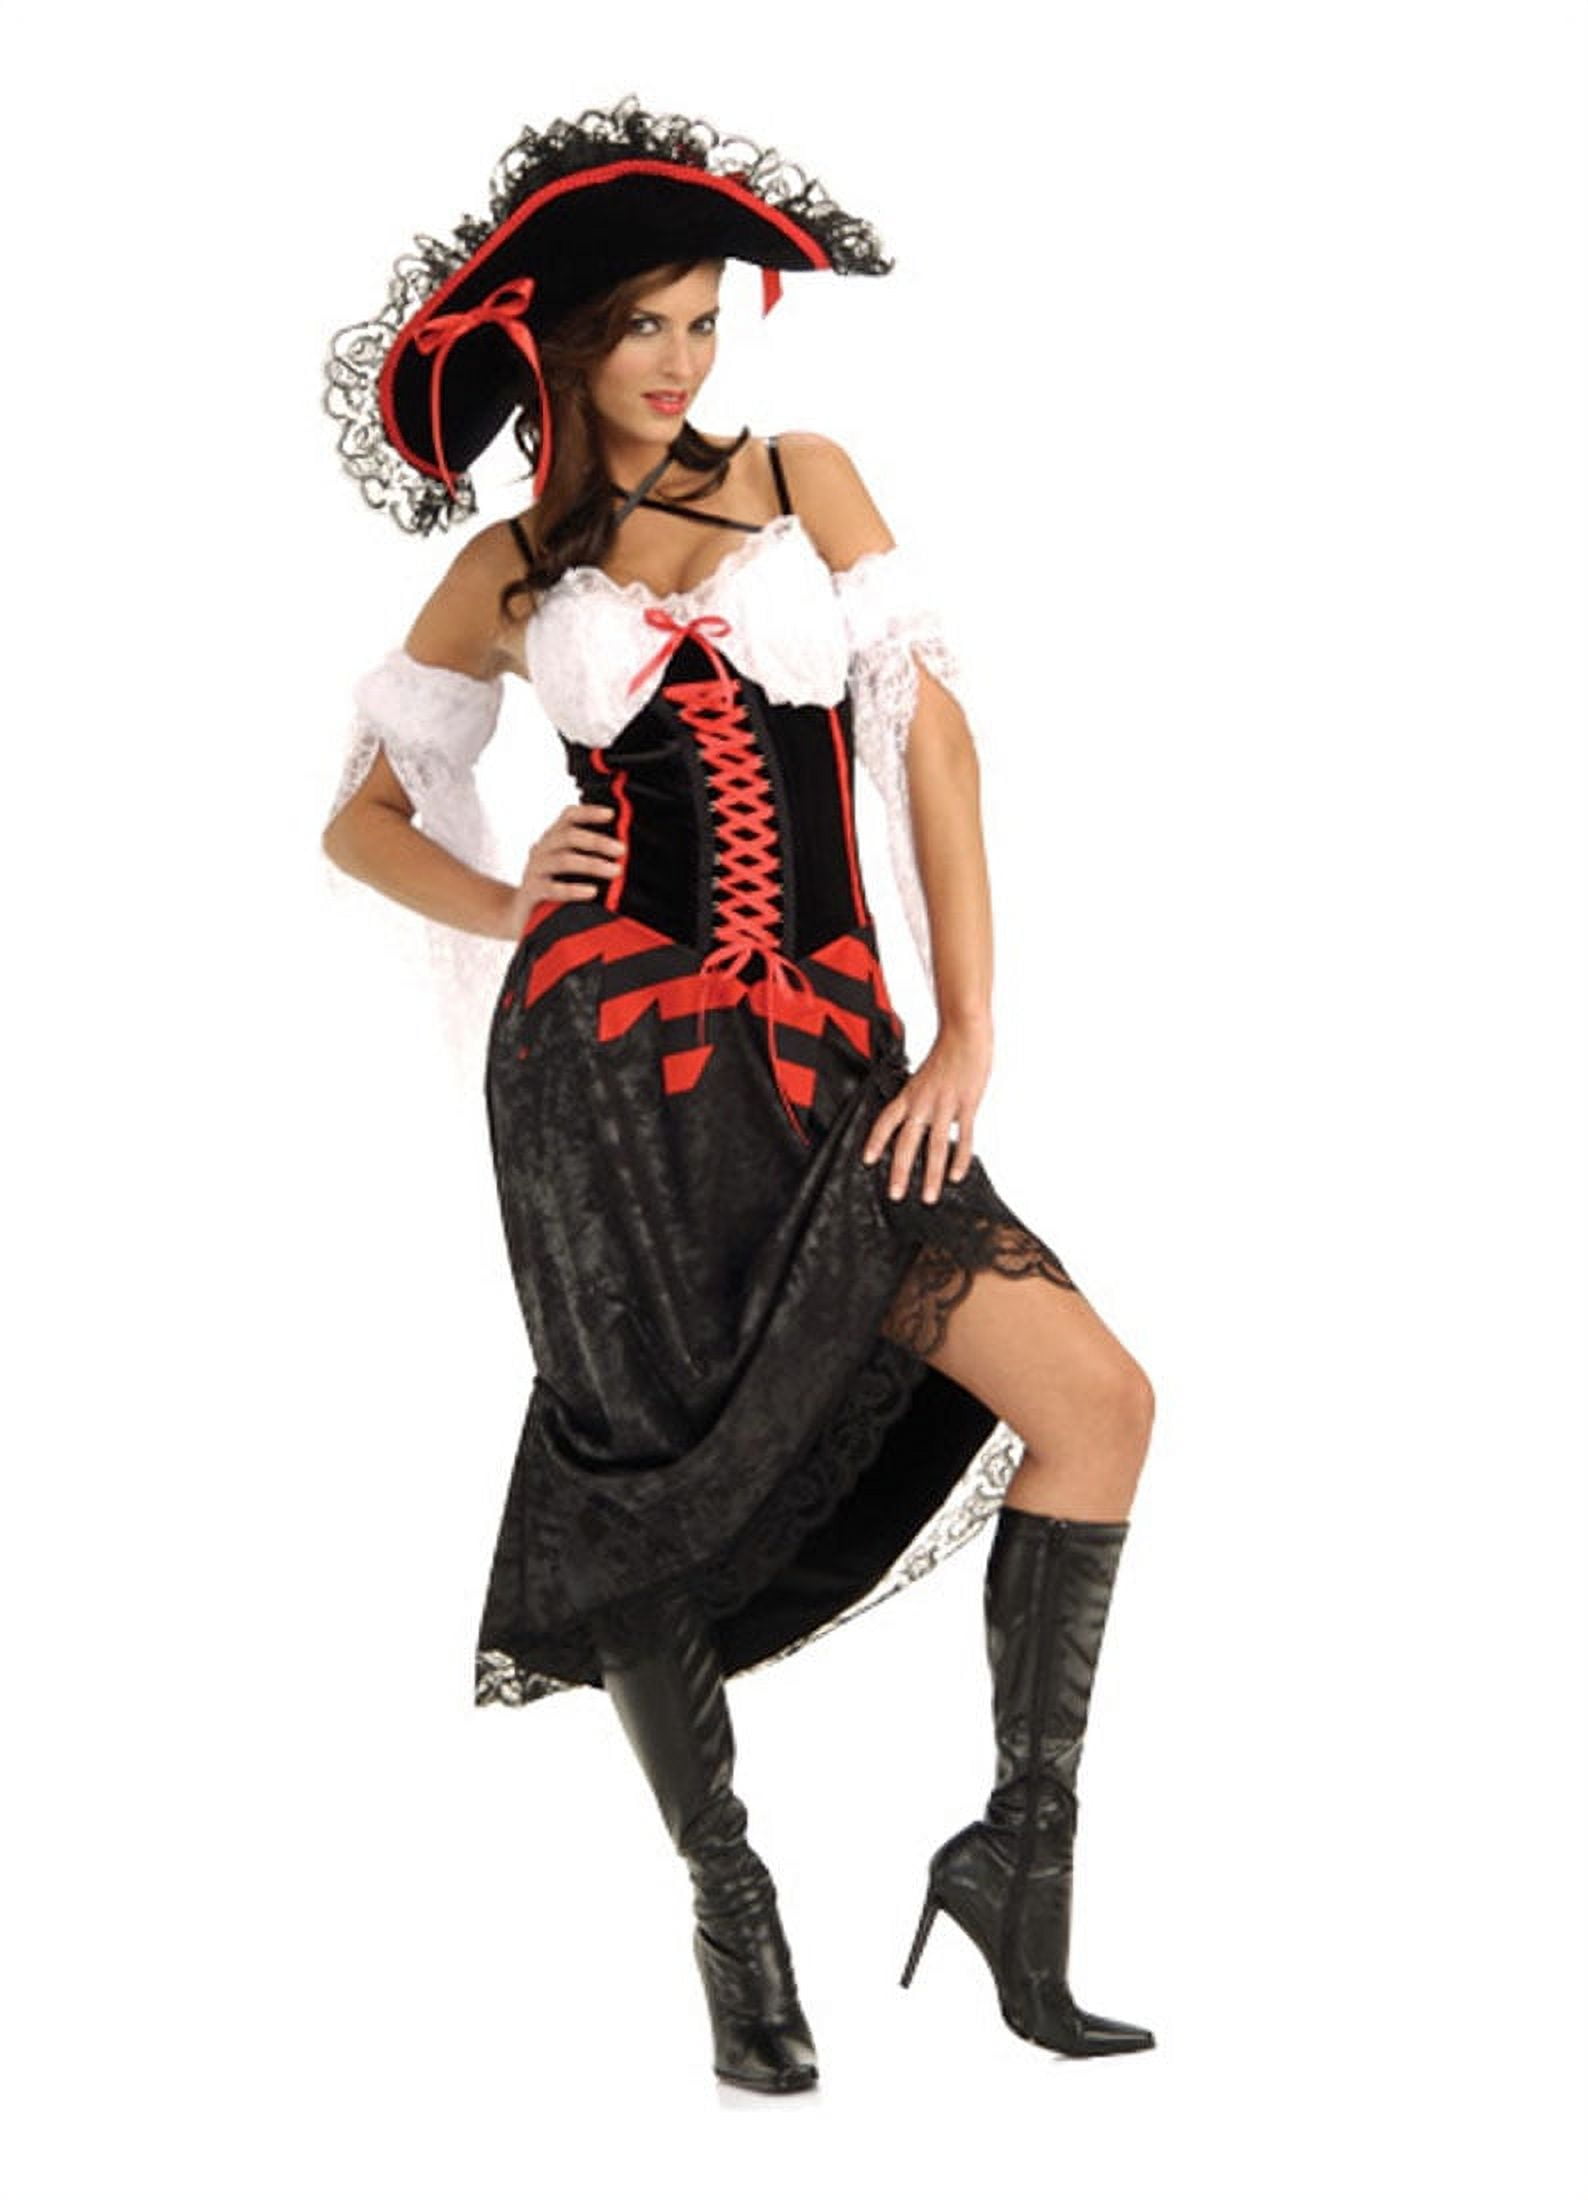 Pirates The Caribbean Costume image photo